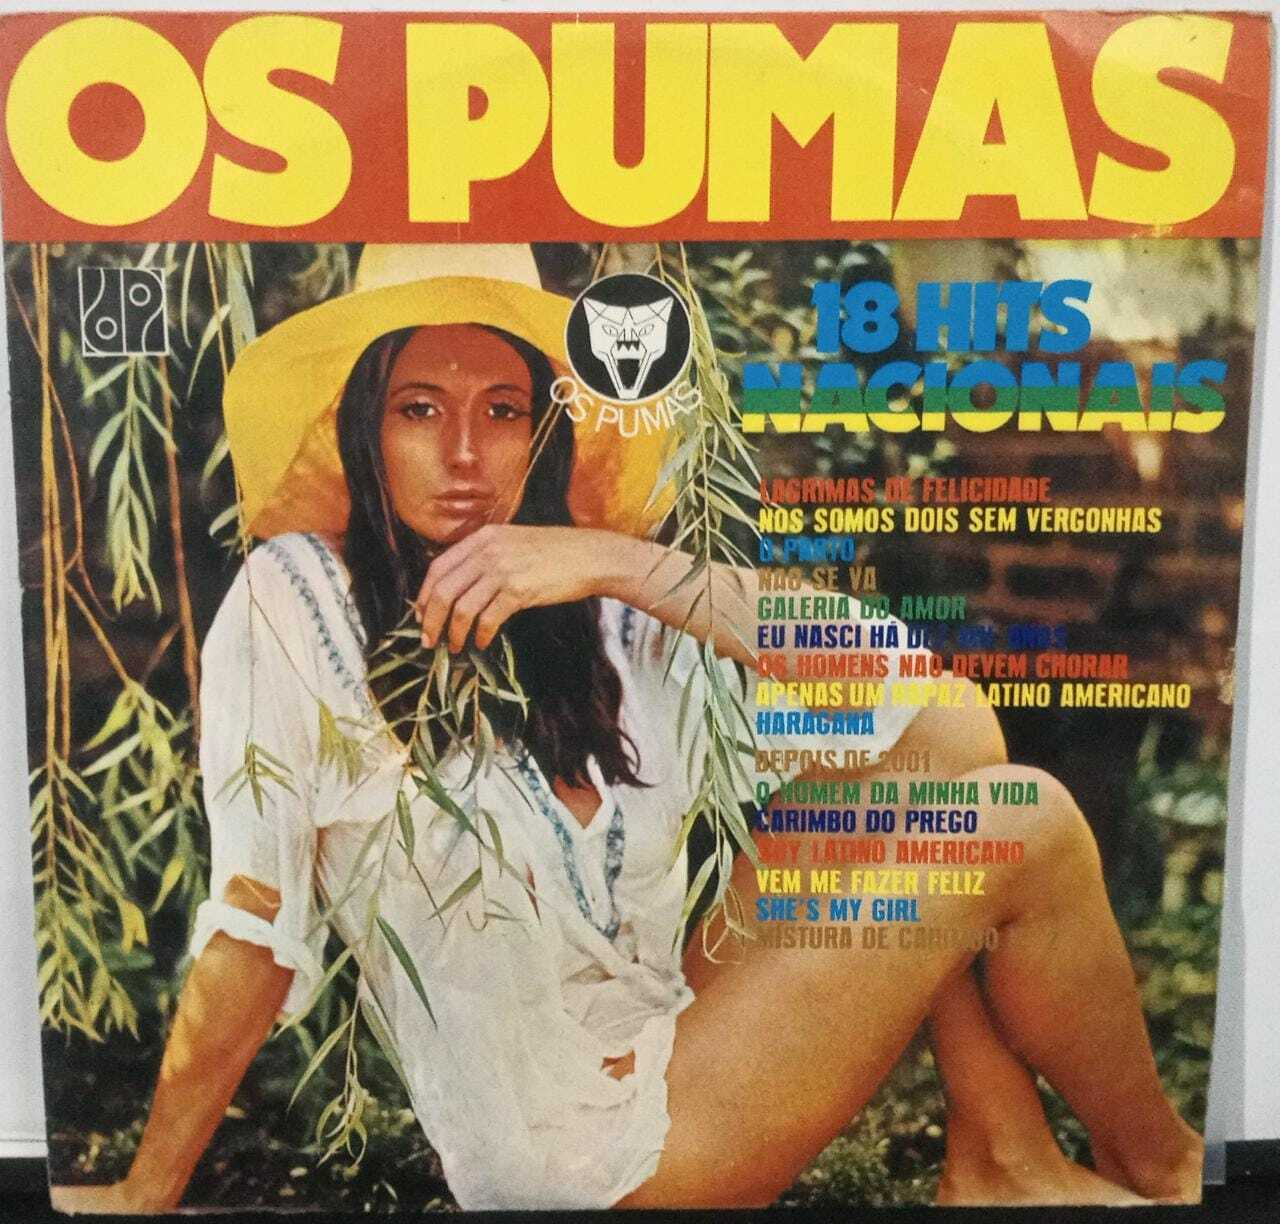 Vinil - Pumas Os - 18 Hits Nacionais